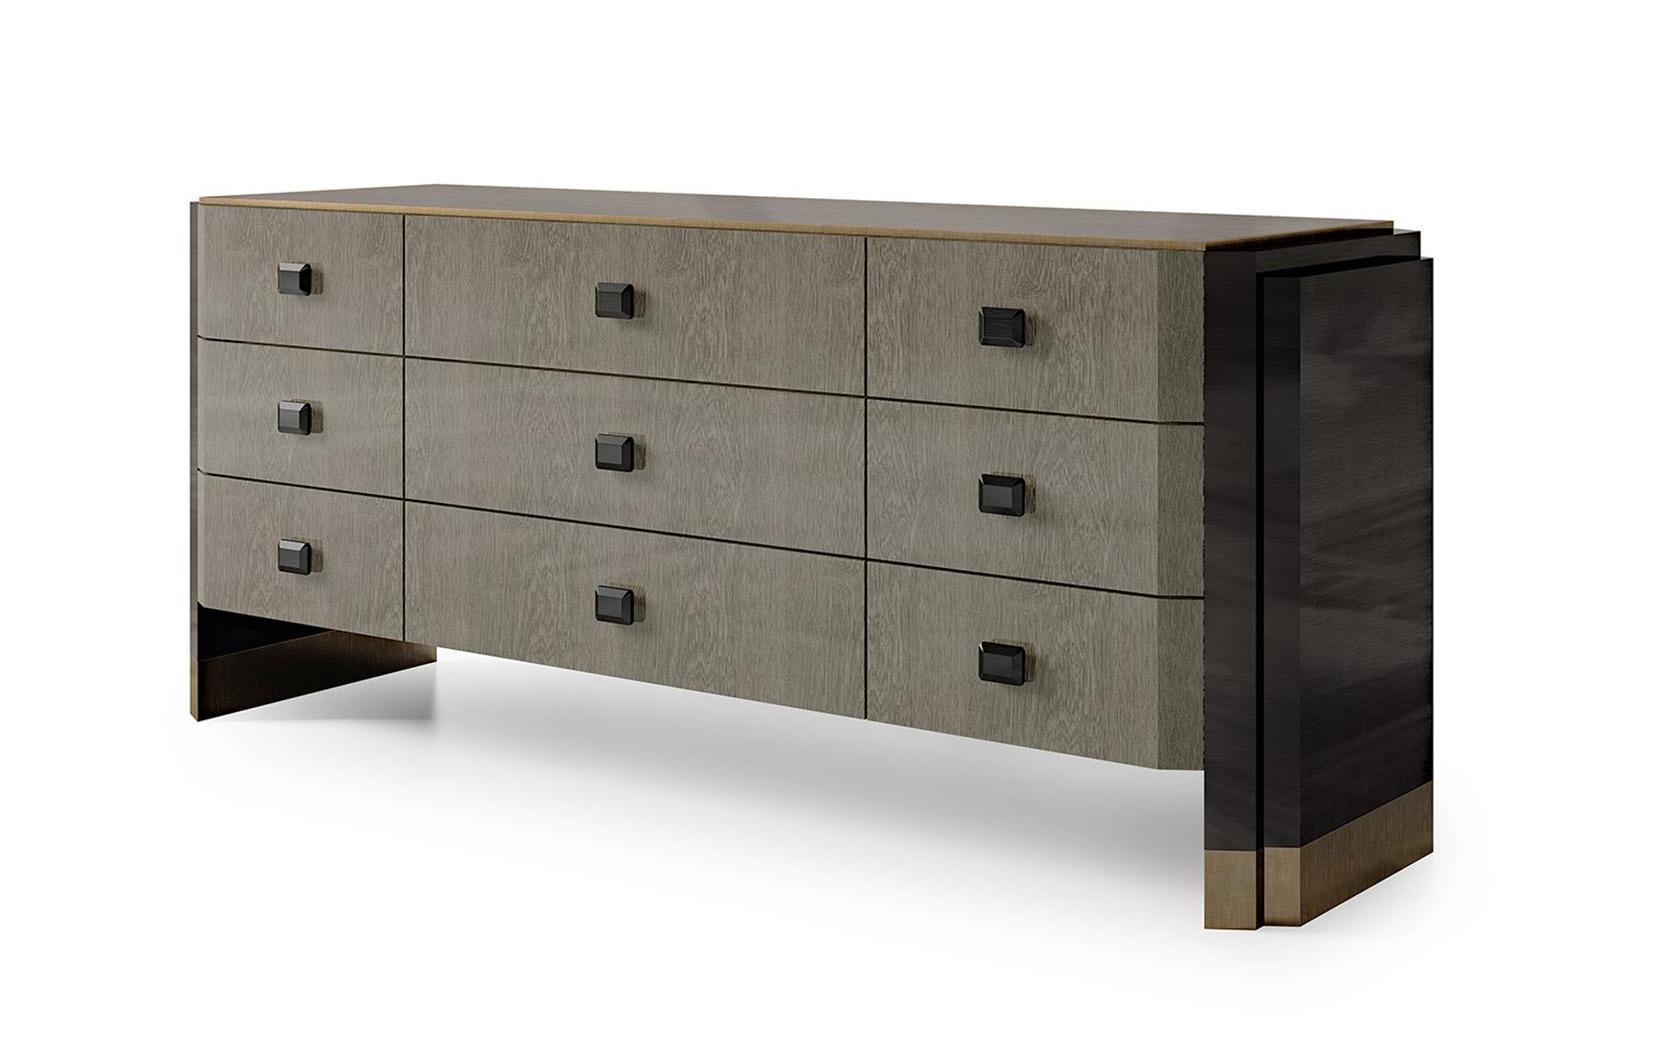 The Nine-Drawer Sucupira Dresser with Bronze Accents